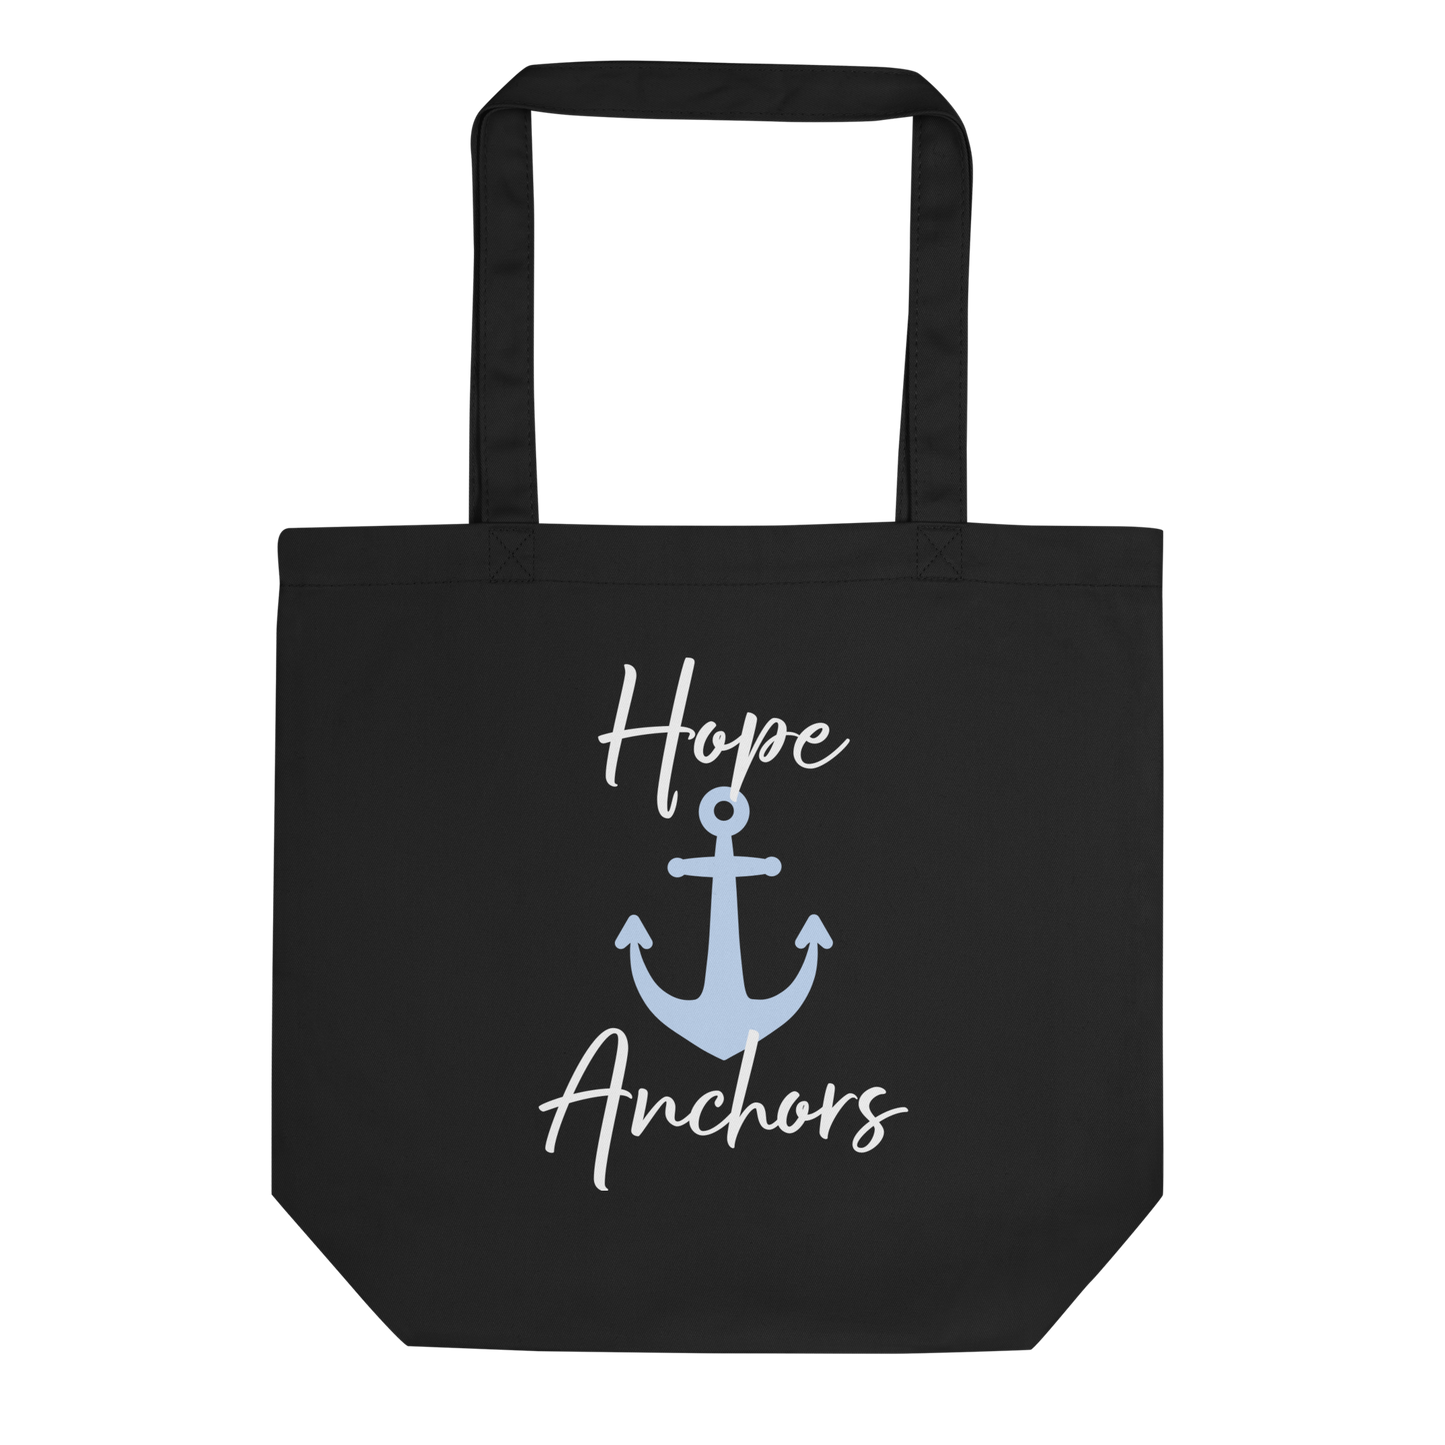 Hope Anchors - Eco Tote Bag